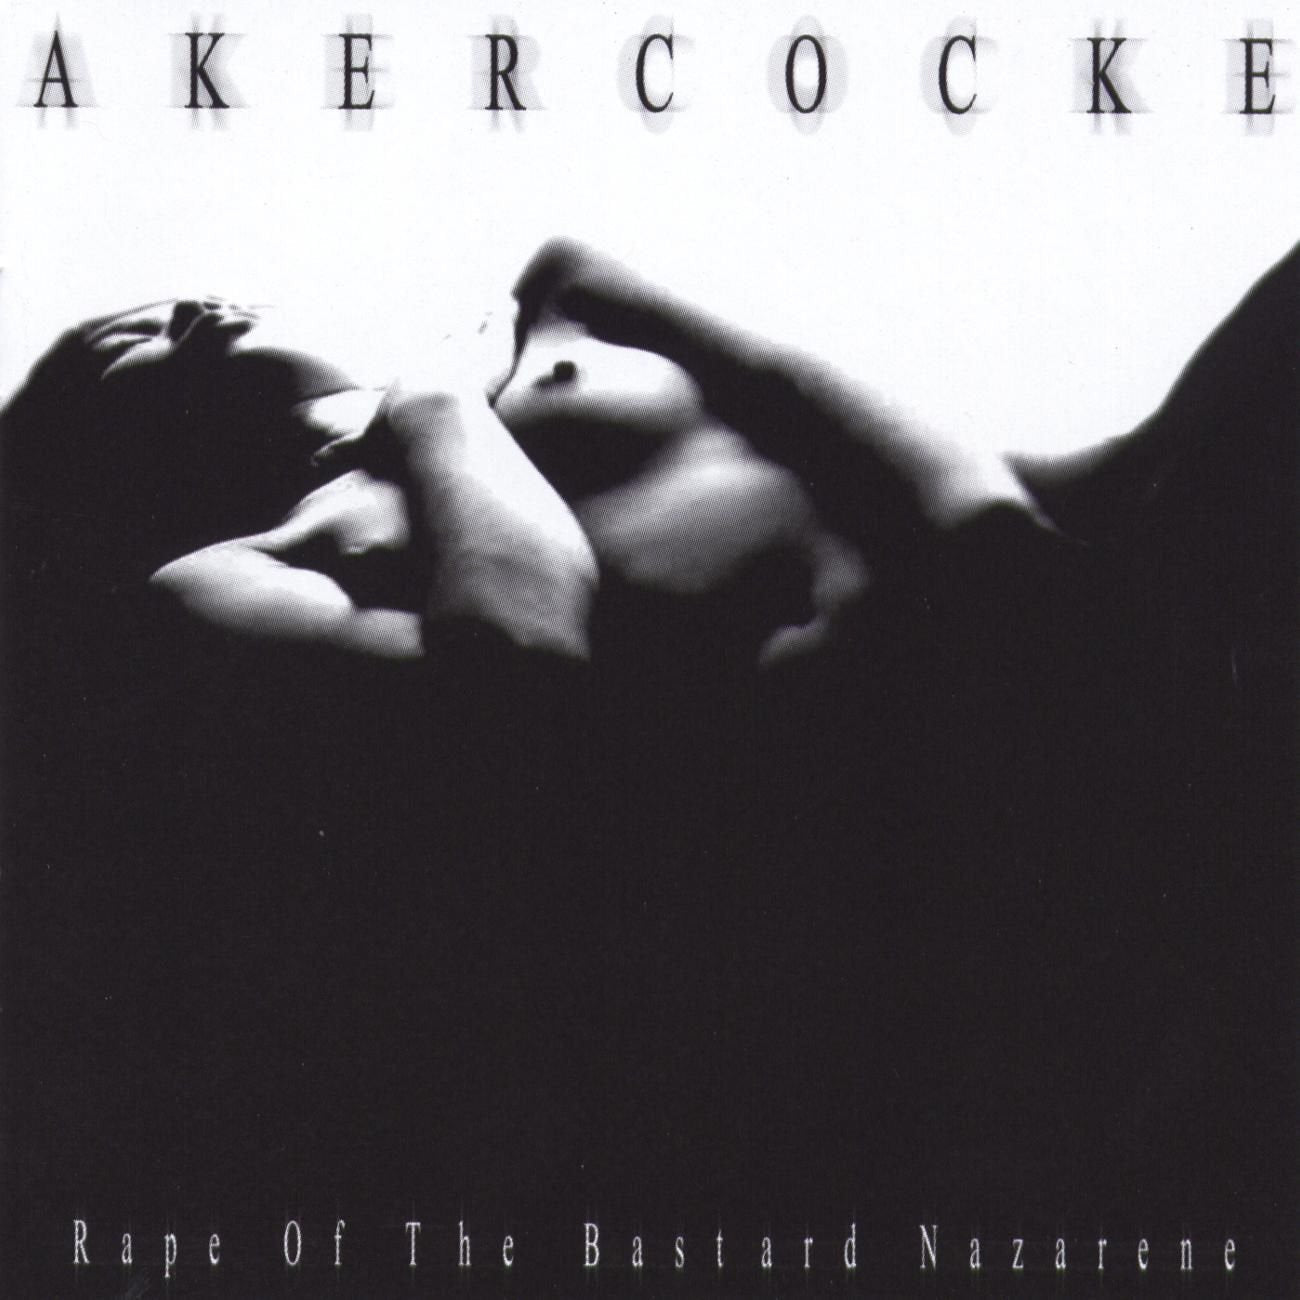 Akercocke "Rape Of The Bastard Nazarene" Vinyl